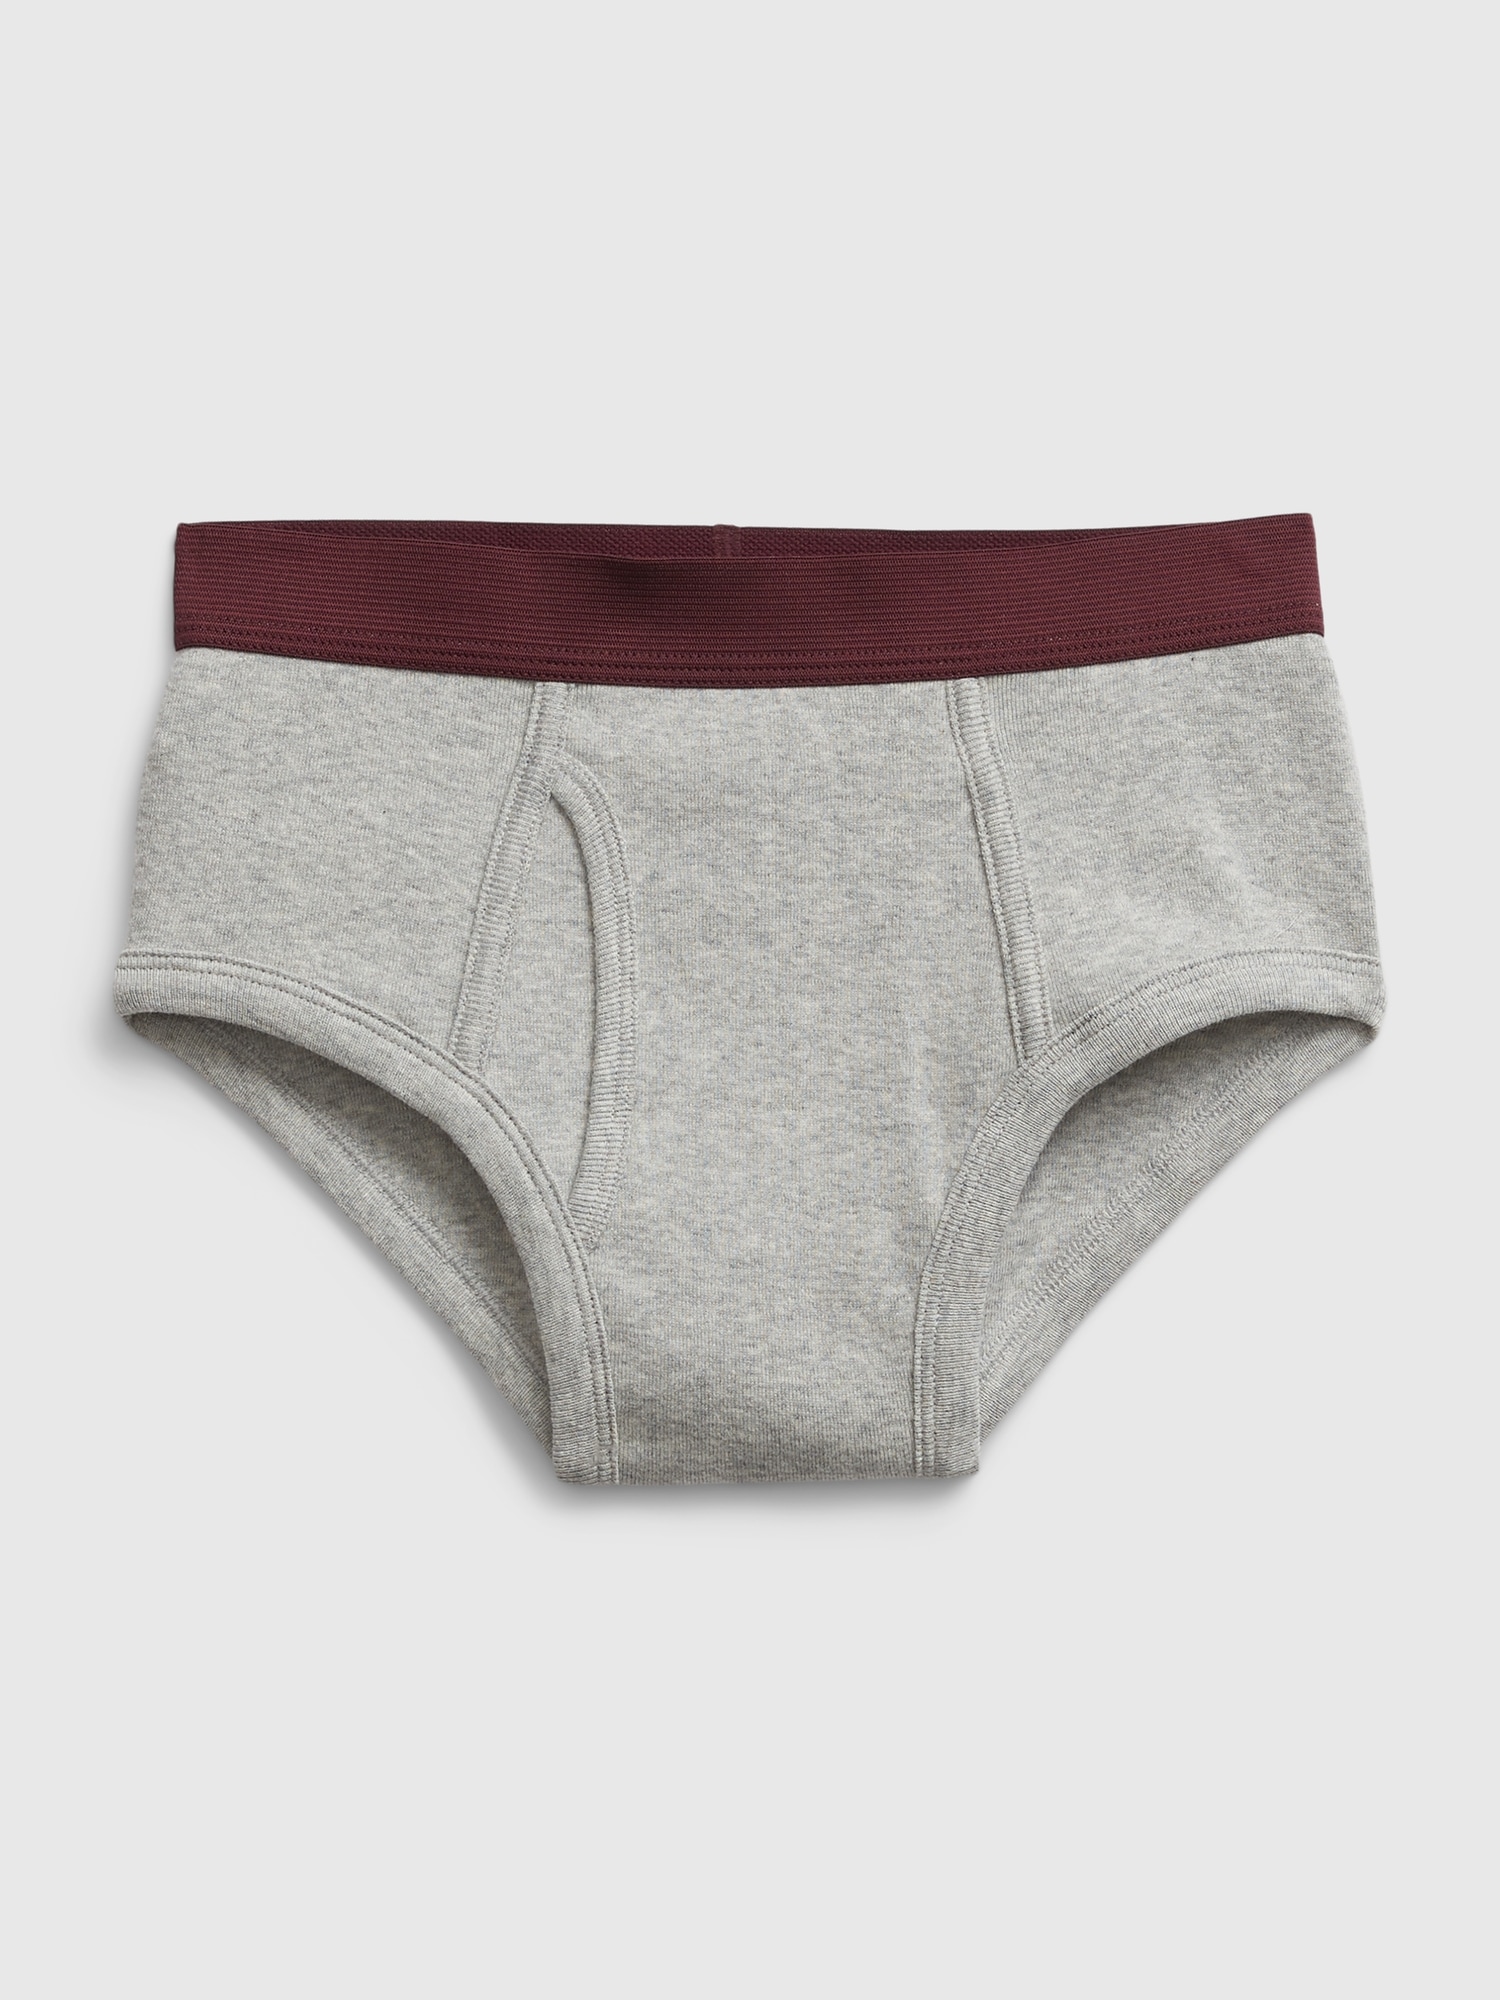 4-Pack Boutique Girls' Antibacterial Briefs Kids Series Panties Cotton  Underwear